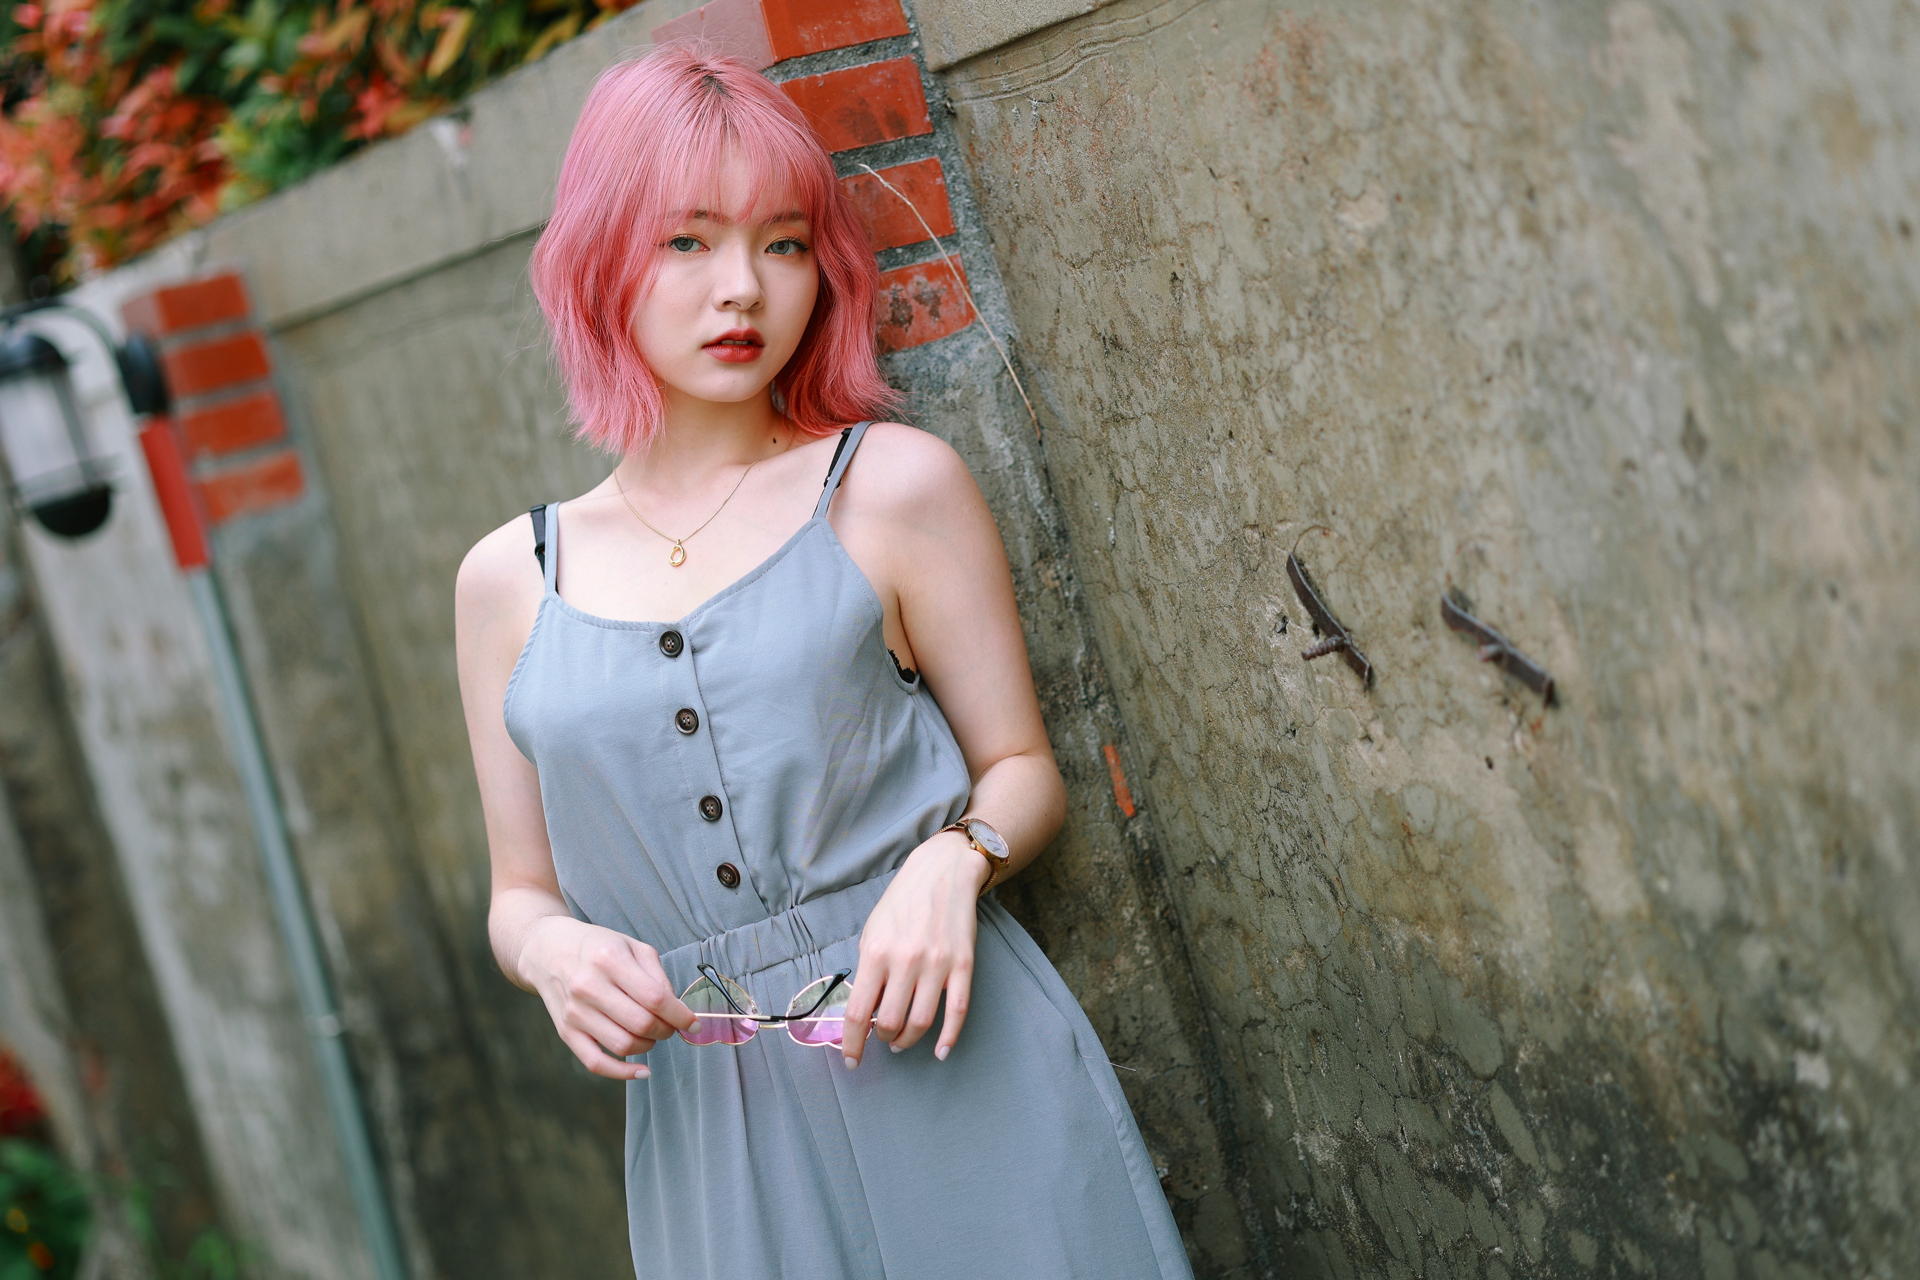 Asian Model Women Pink Hair Grey Dress Necklace Wristwatch Wall Bricks Depth Of Field Sunglasses Lam 1920x1280